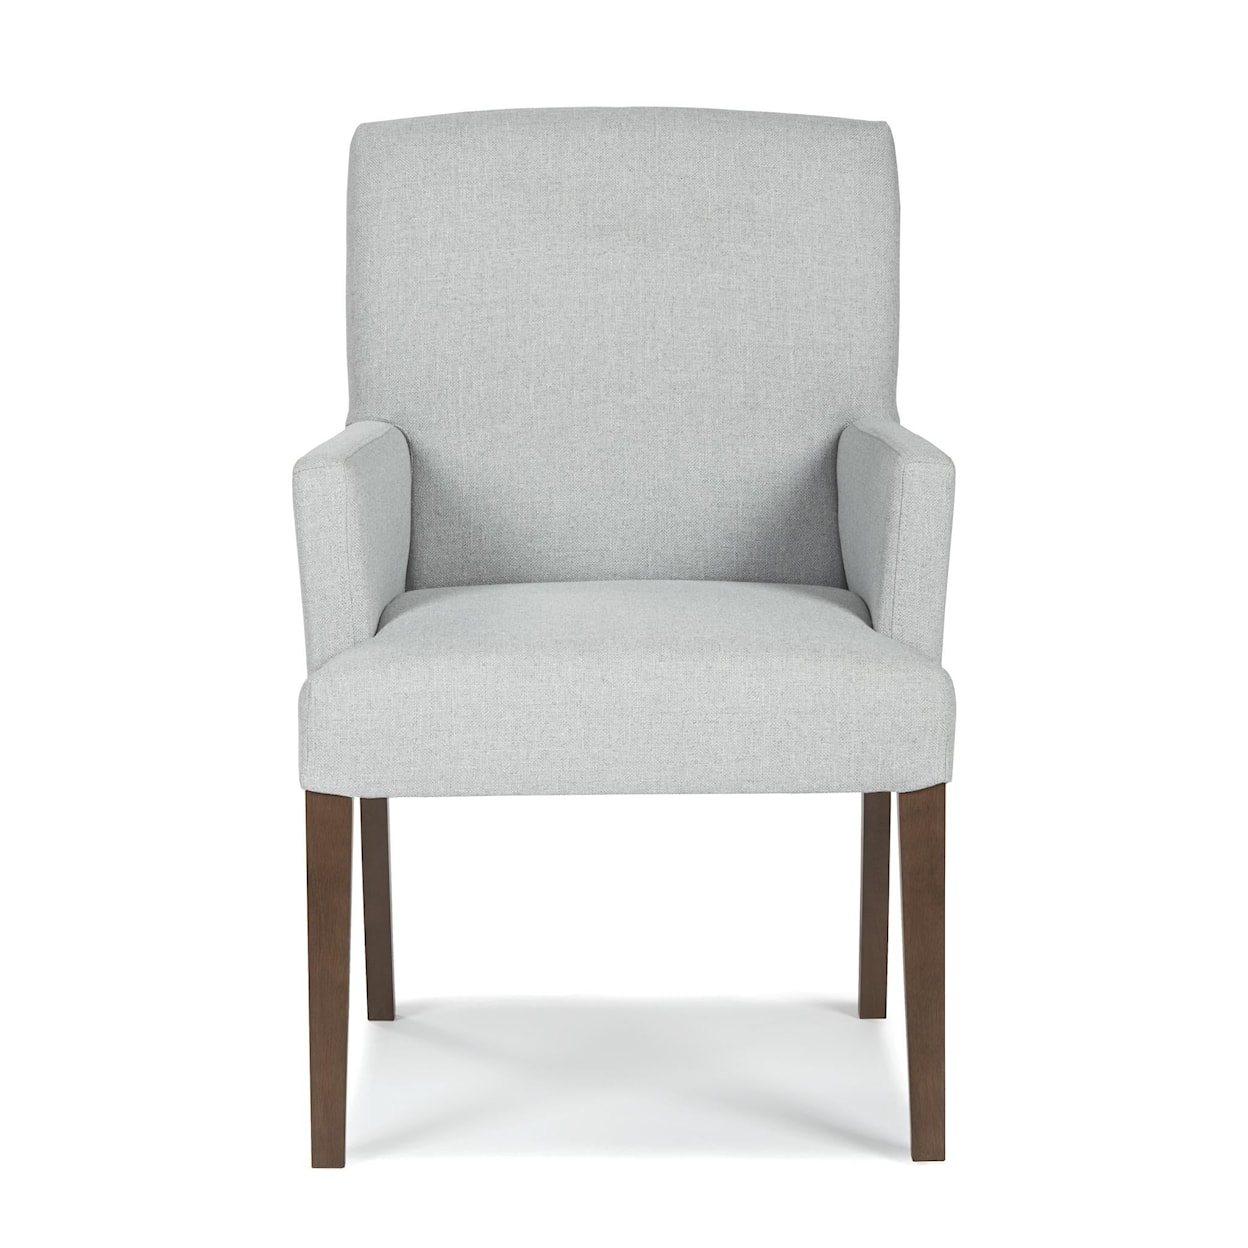 Bravo Furniture Denai Arm Chair